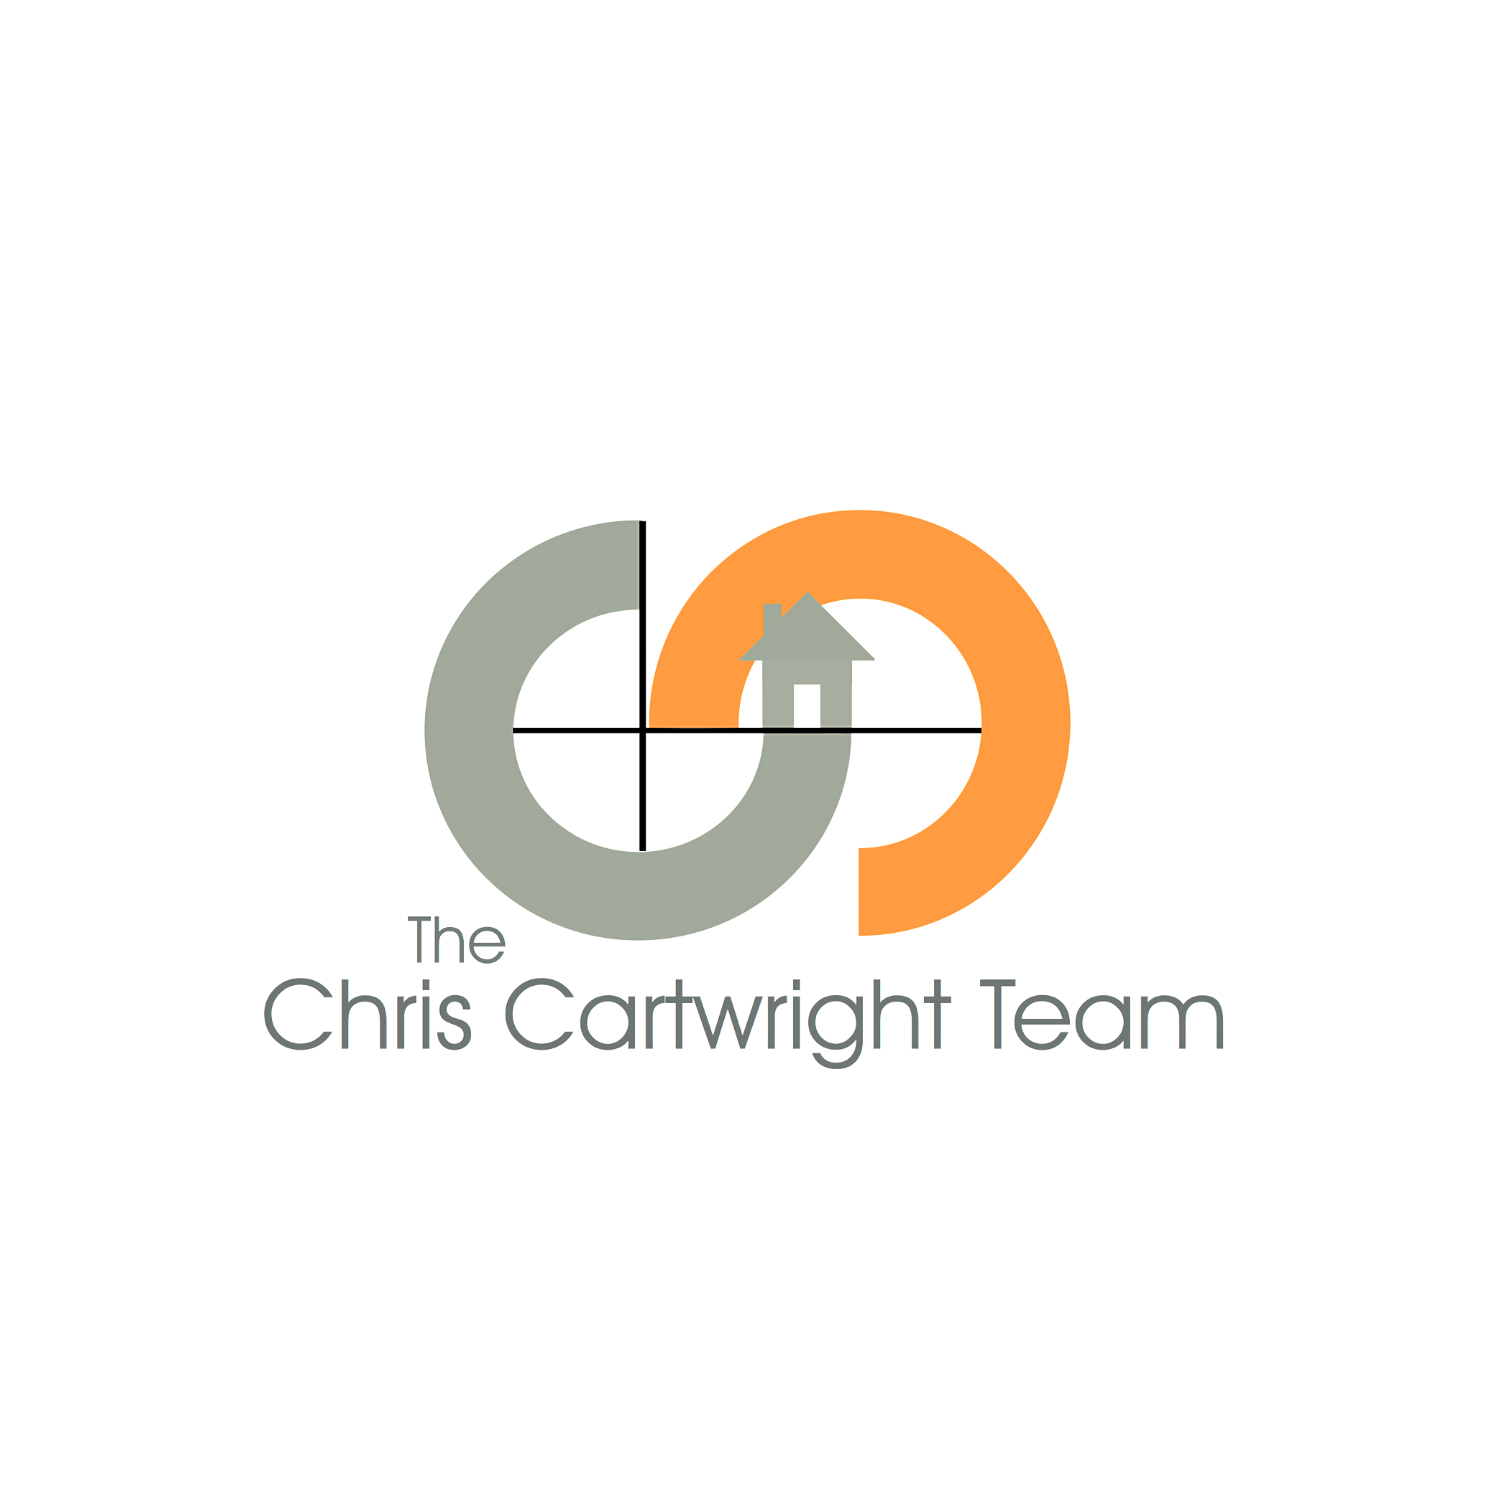 The Chris Cartwright Team